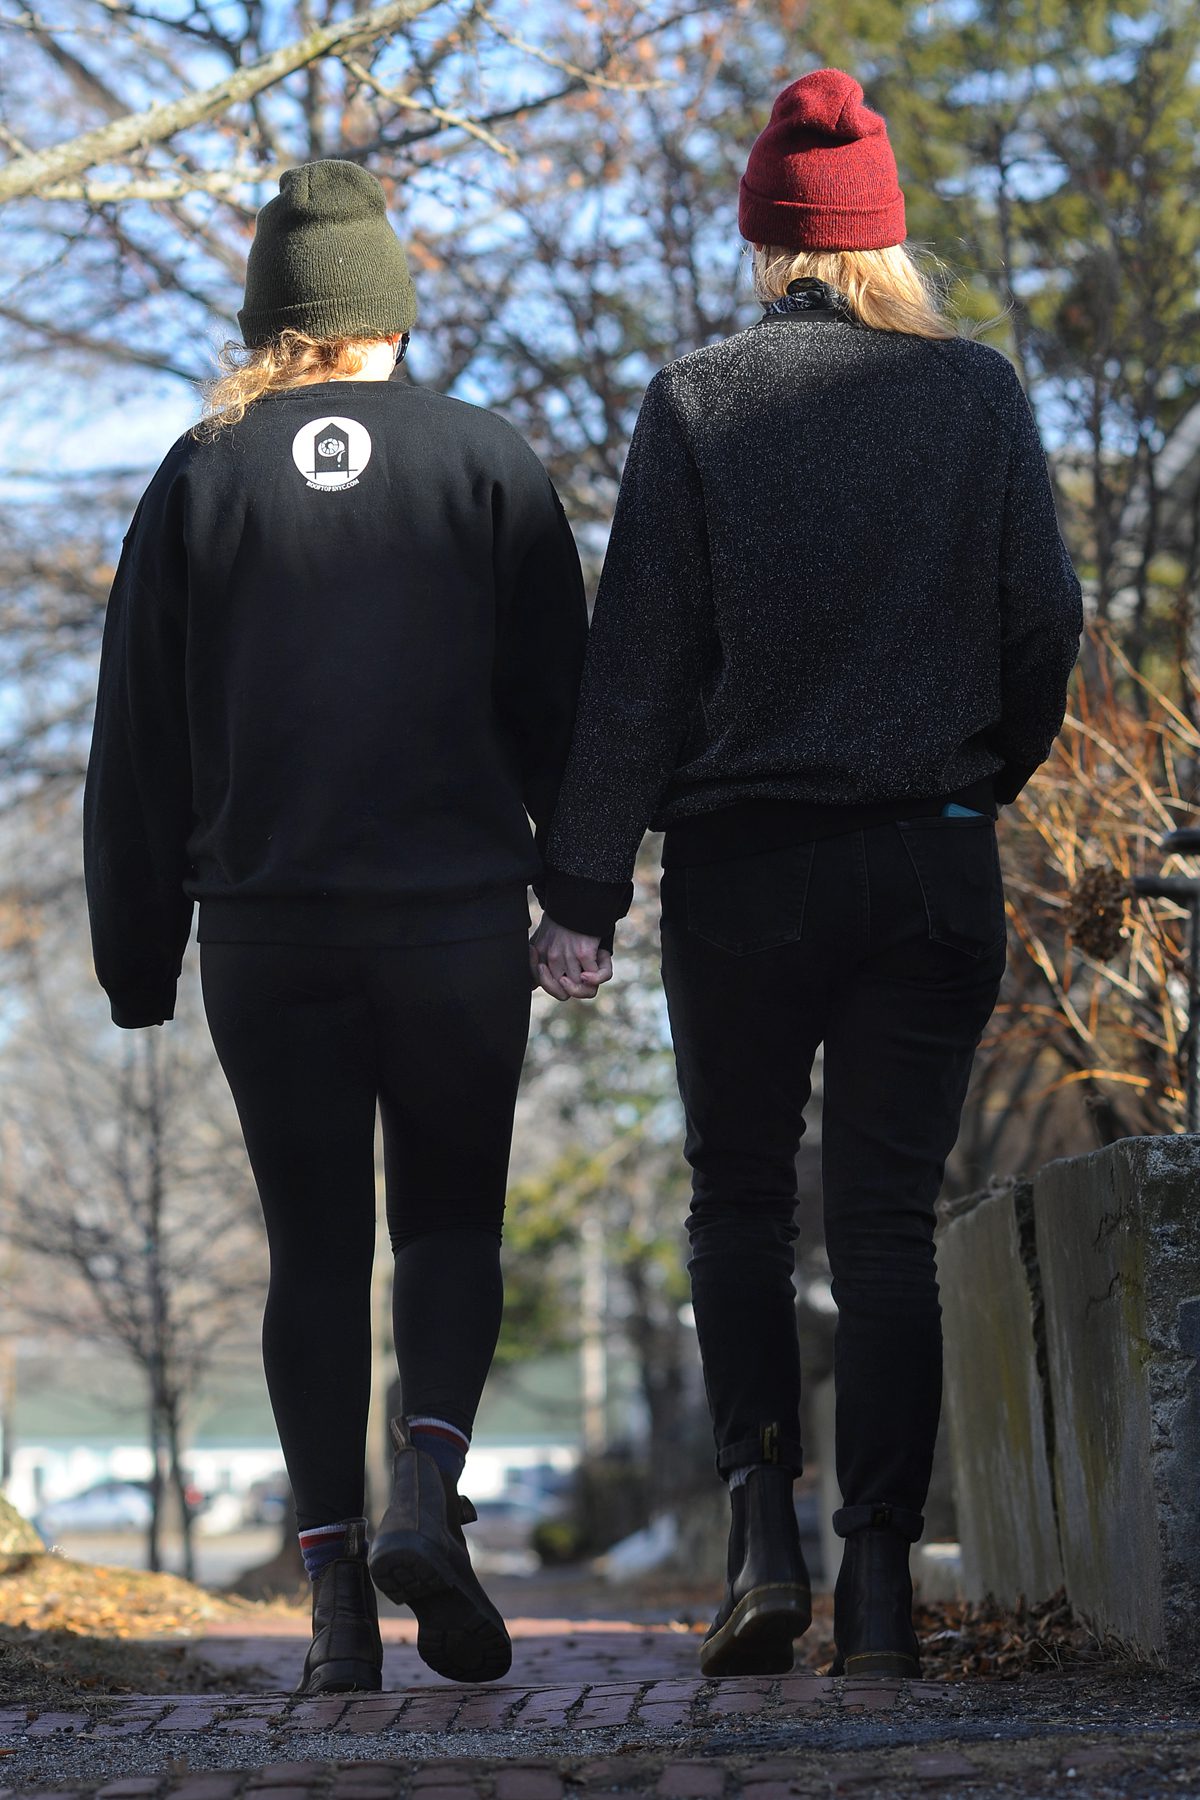 2 women of LGBTQ community holding hands walking on Portland Maine street